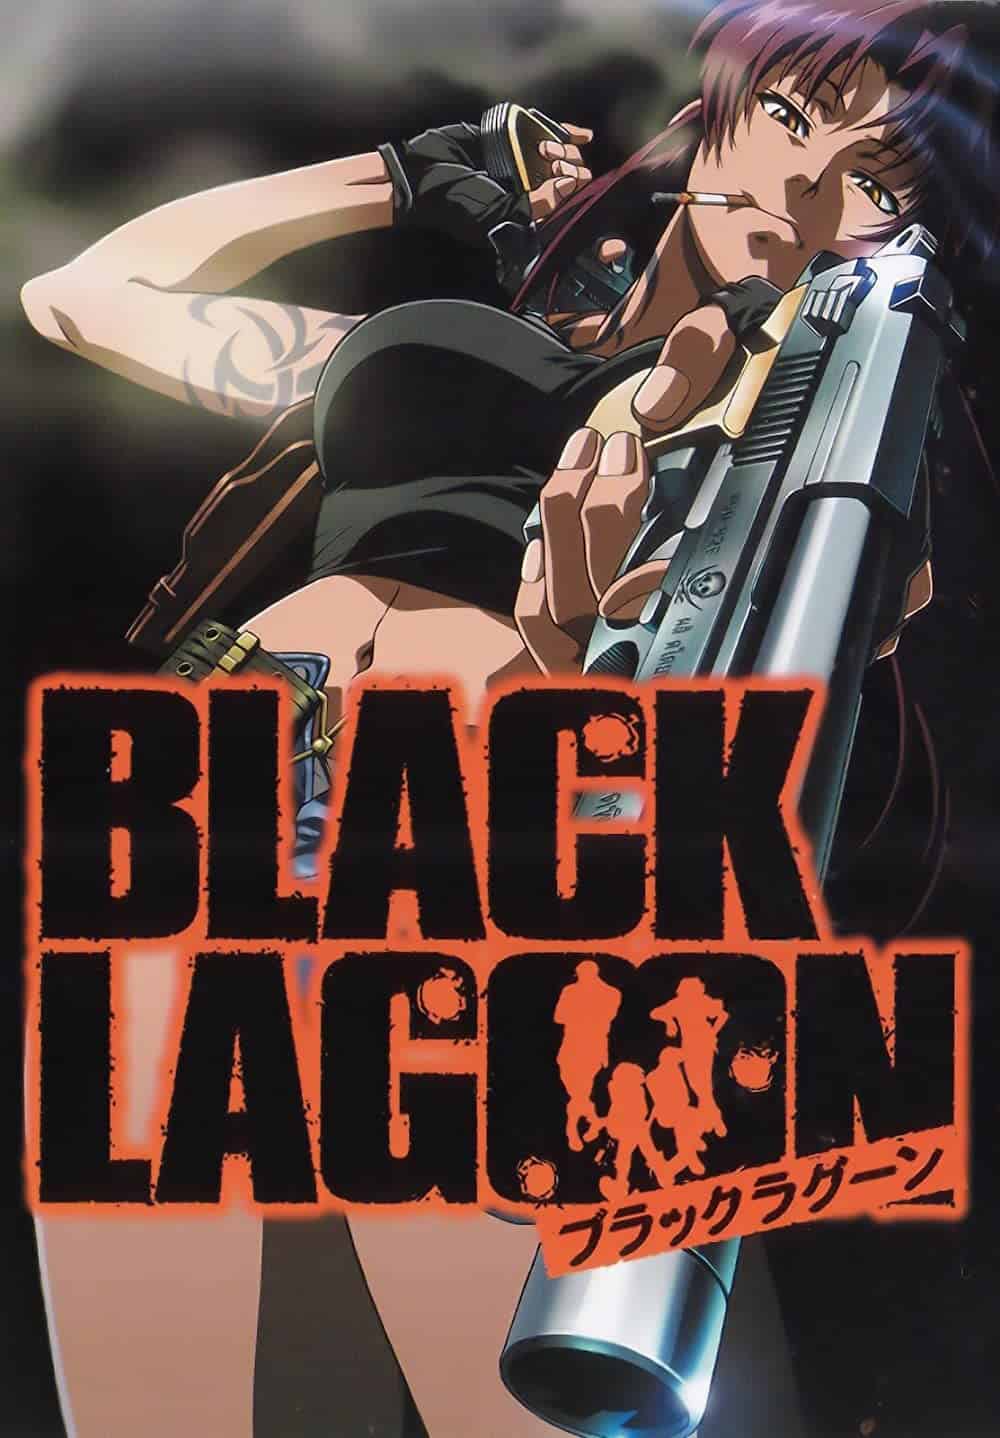 Black Lagoon hd poster